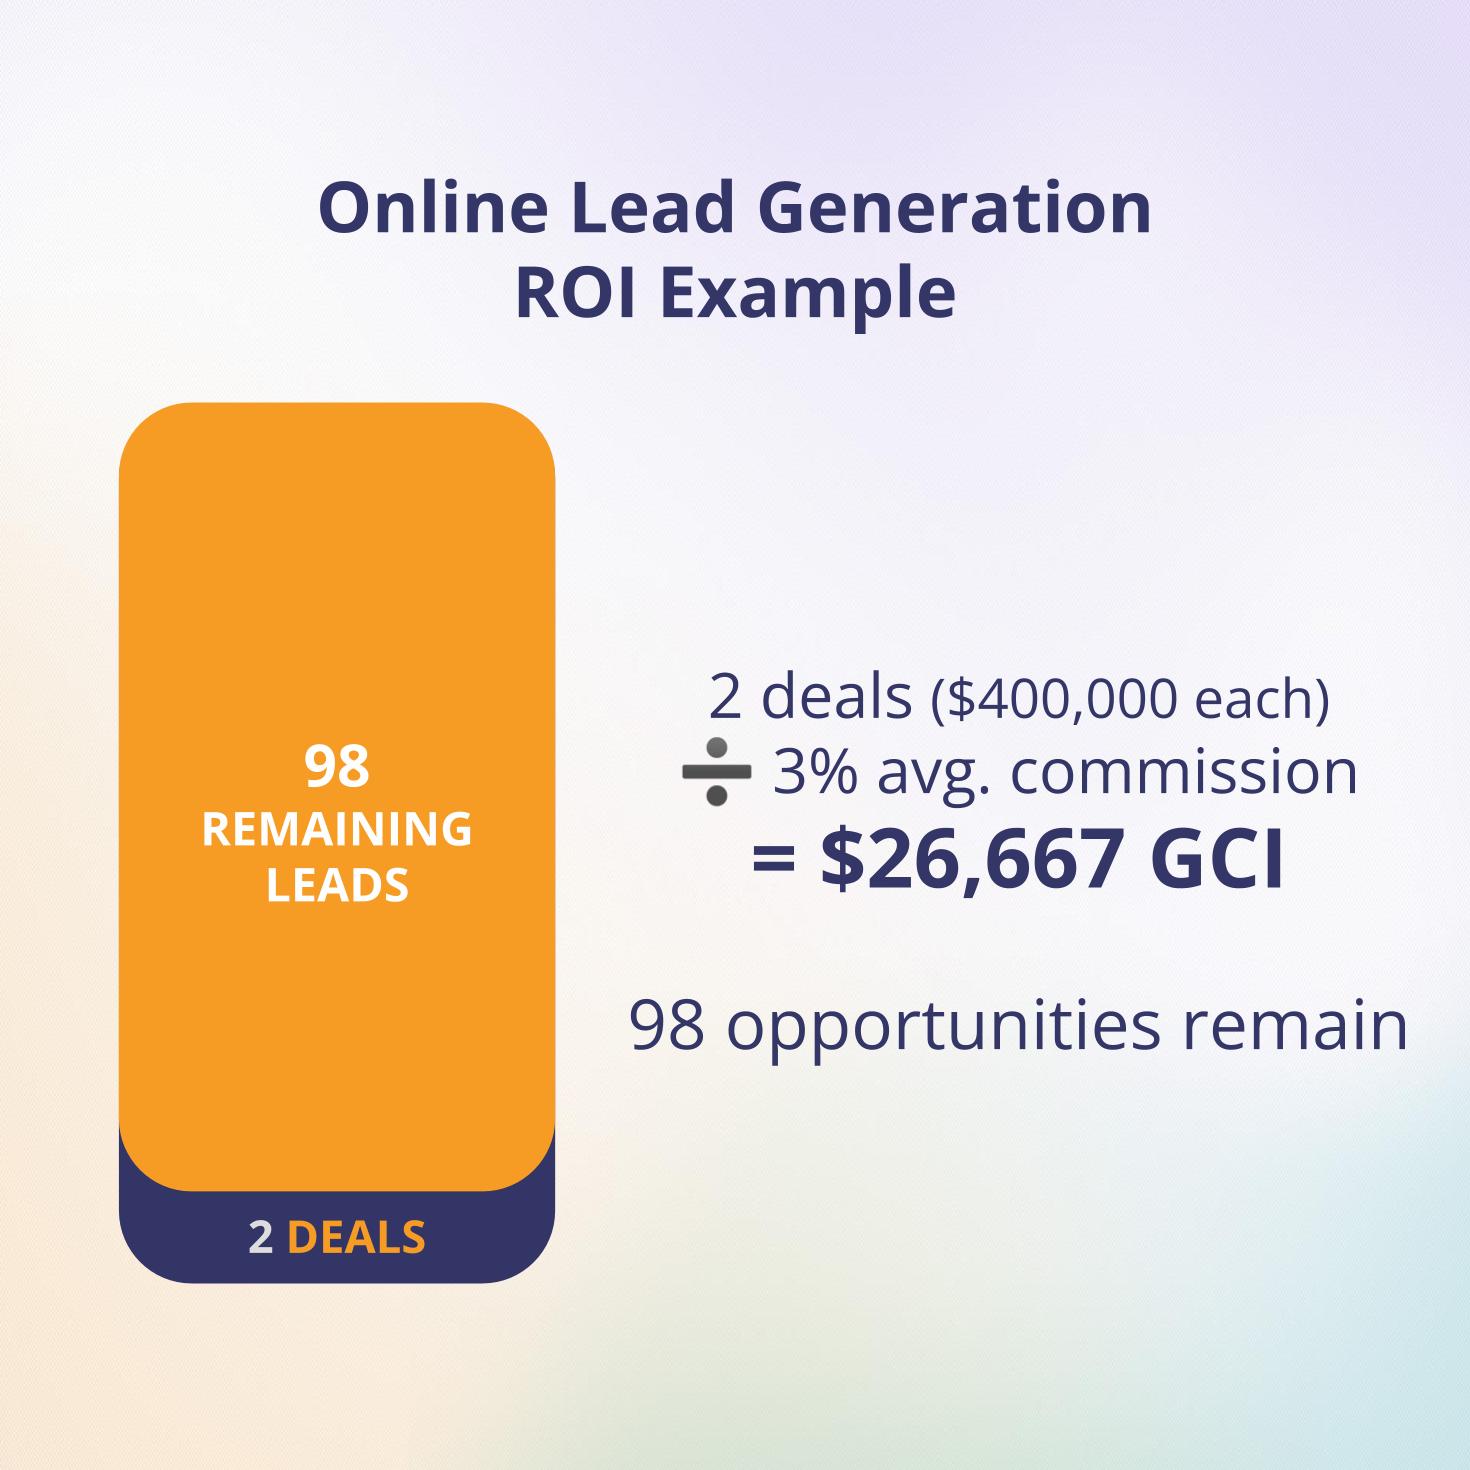 Online Lead Generation ROI from Elm Street Technology